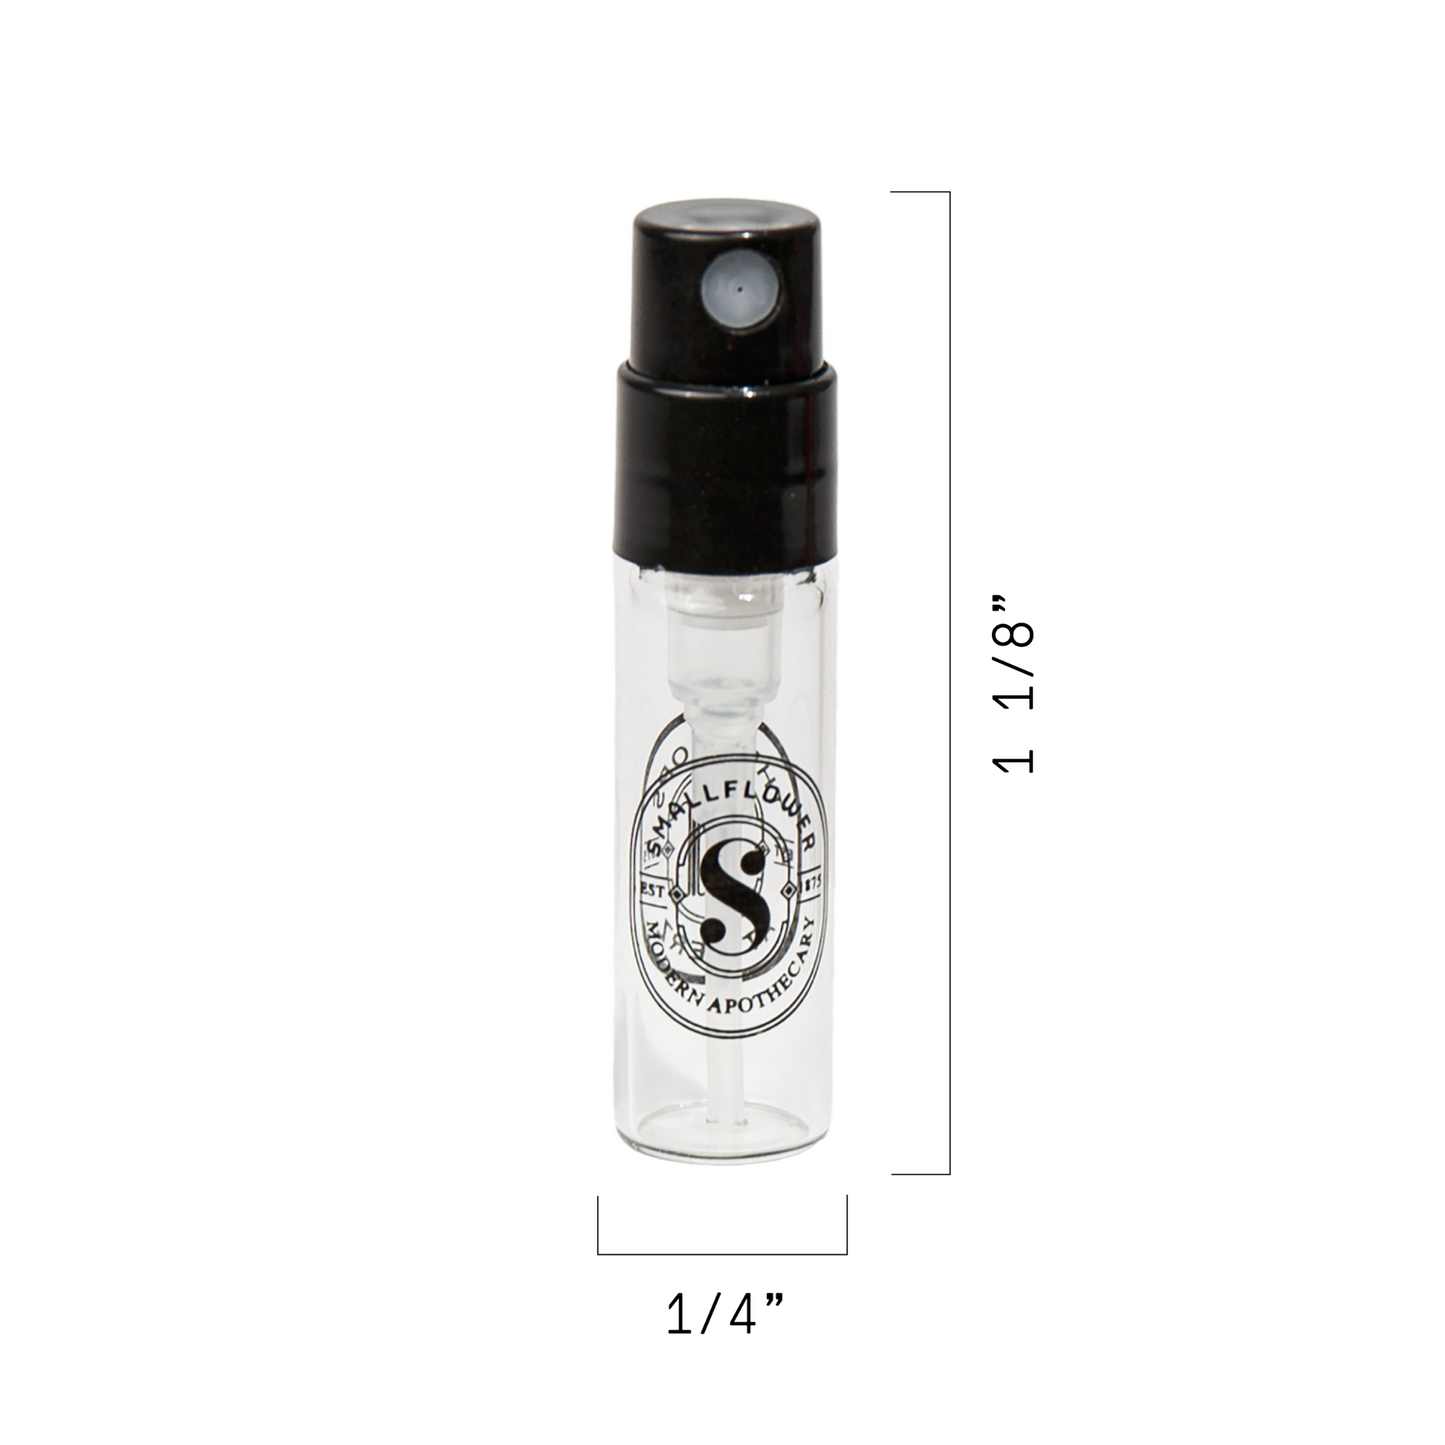 Tauer Perfumes Sample - Sundowner EDP (1 ml vial) #10084384